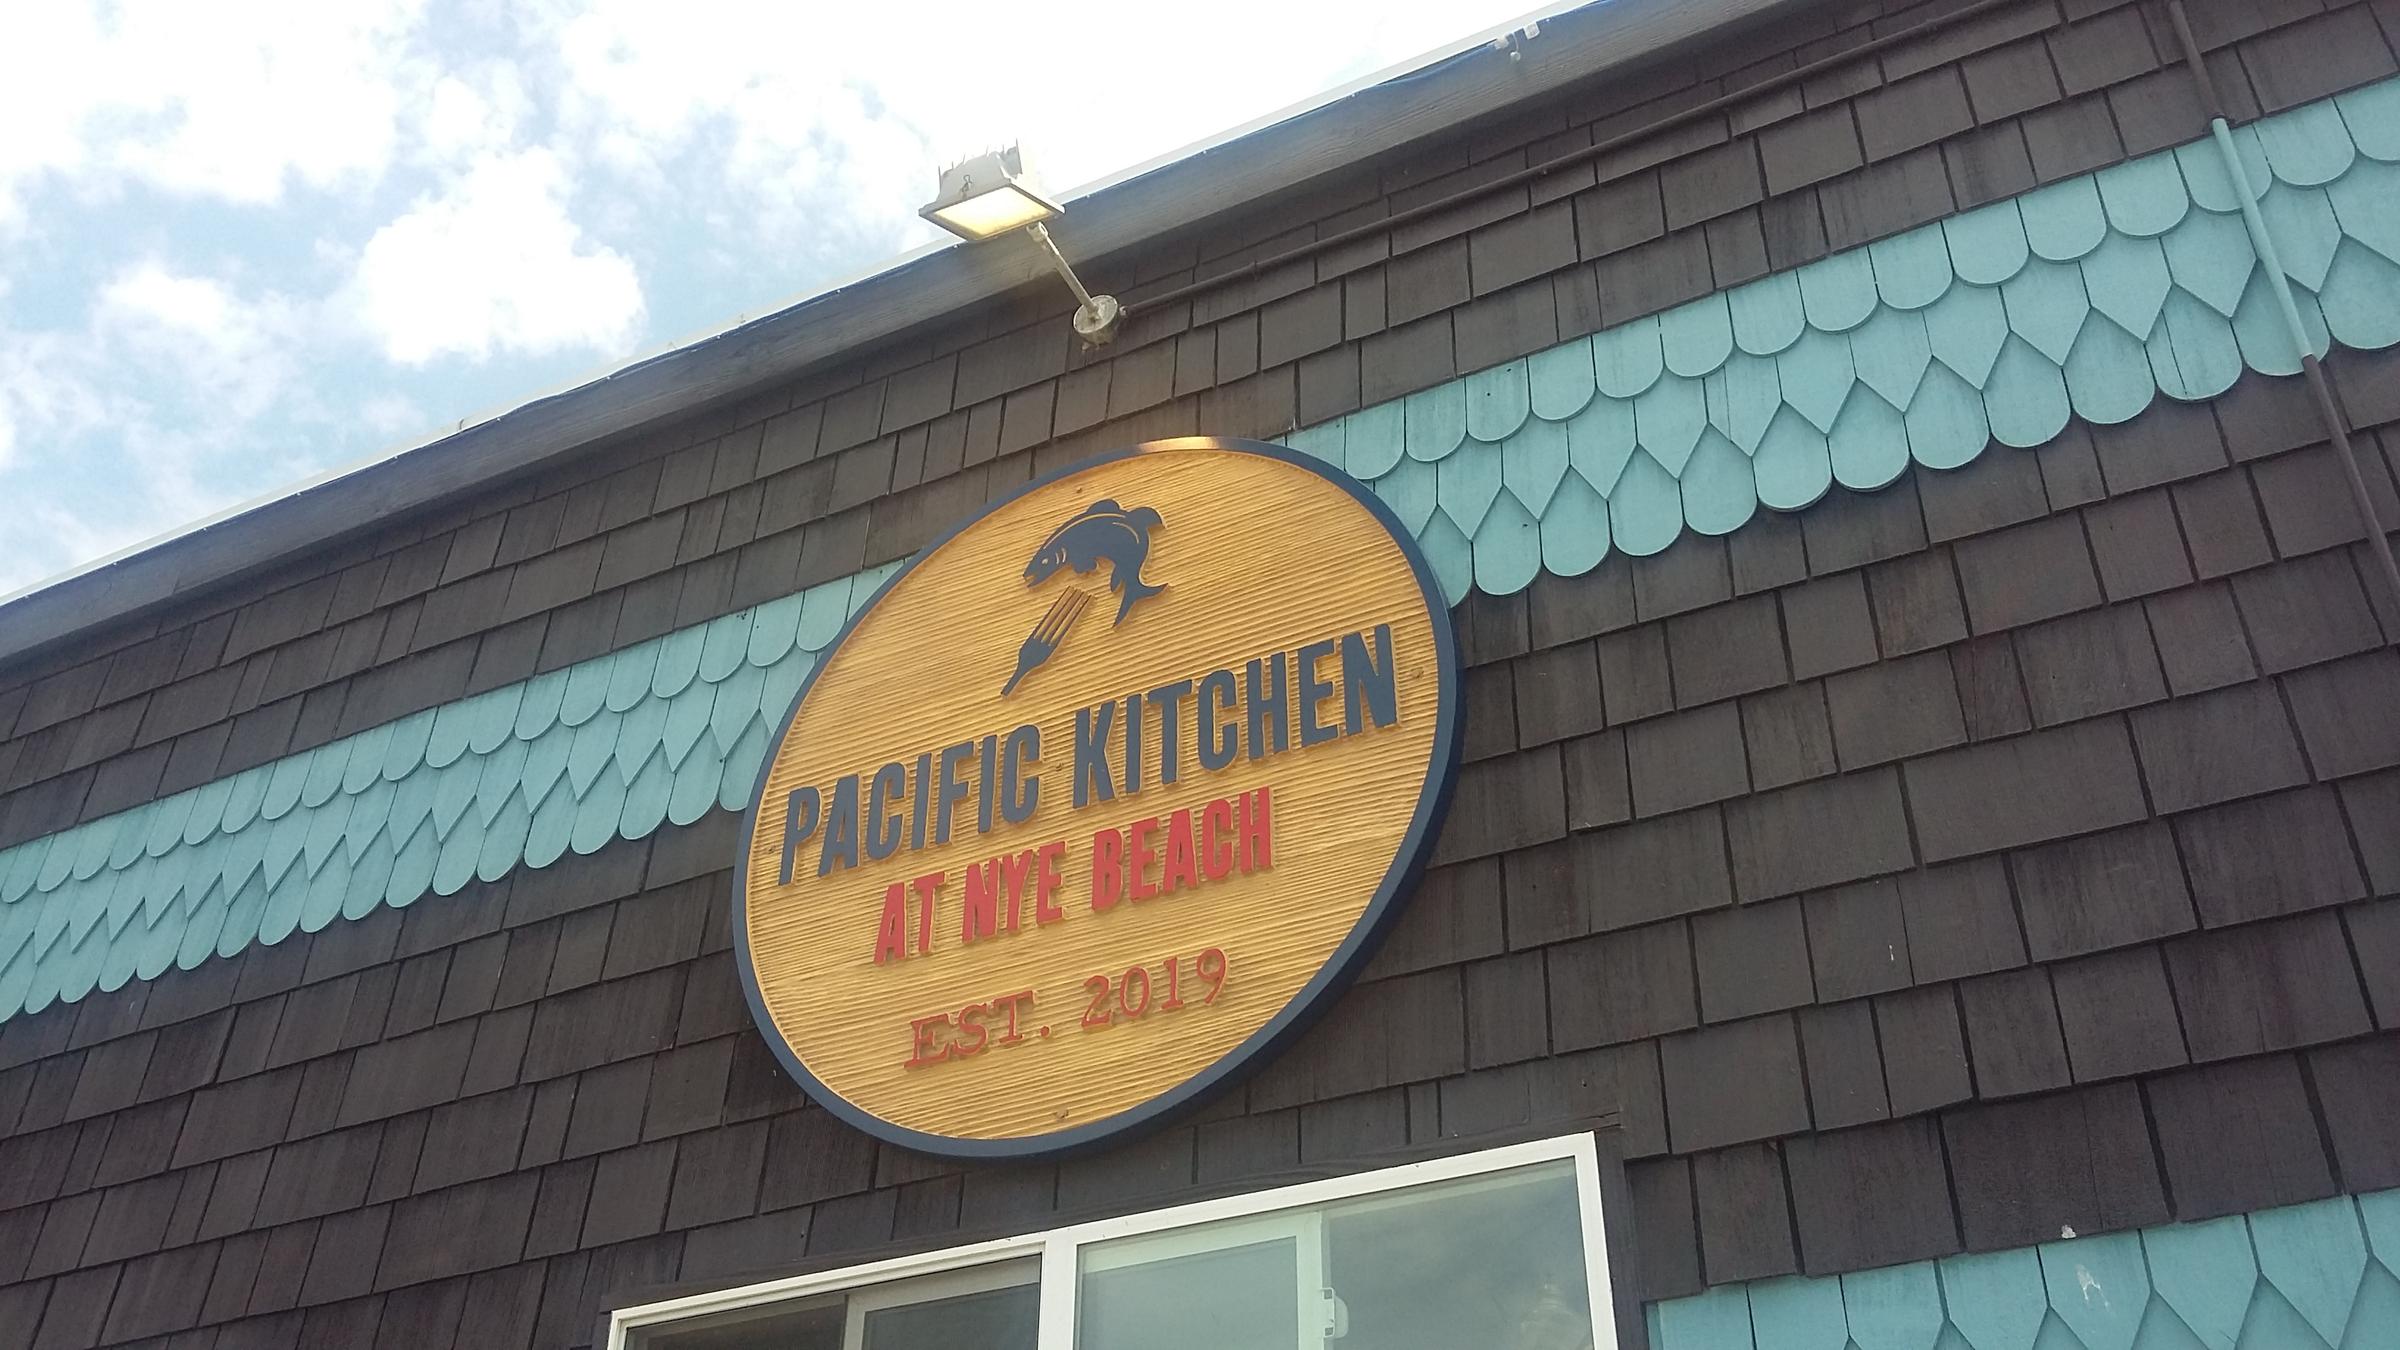 Pet Friendly Pacific Kitchen at Nye Beach